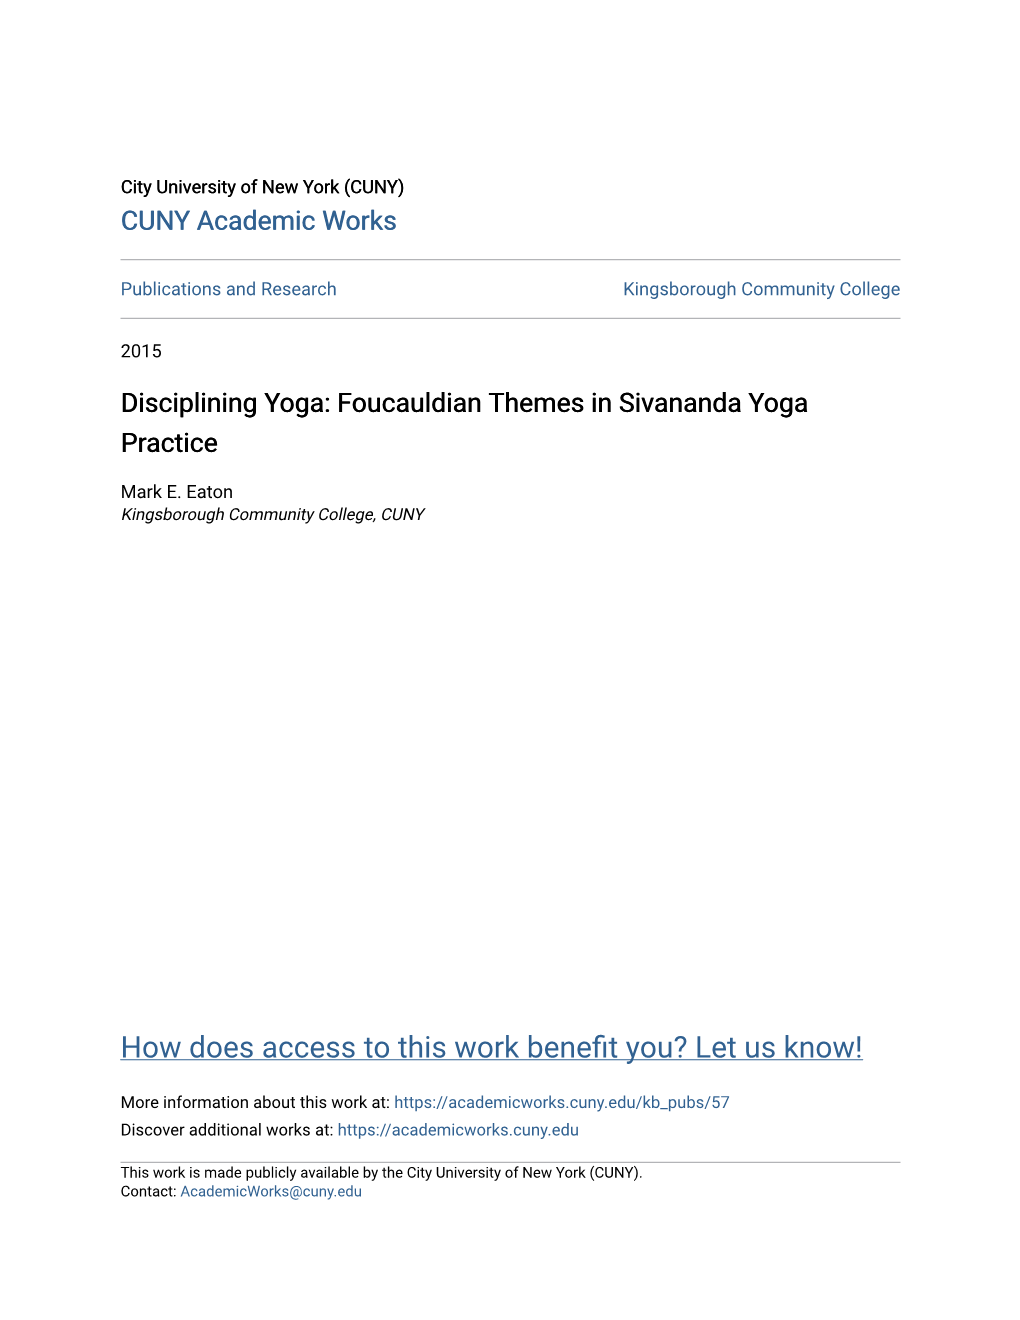 Disciplining Yoga: Foucauldian Themes in Sivananda Yoga Practice